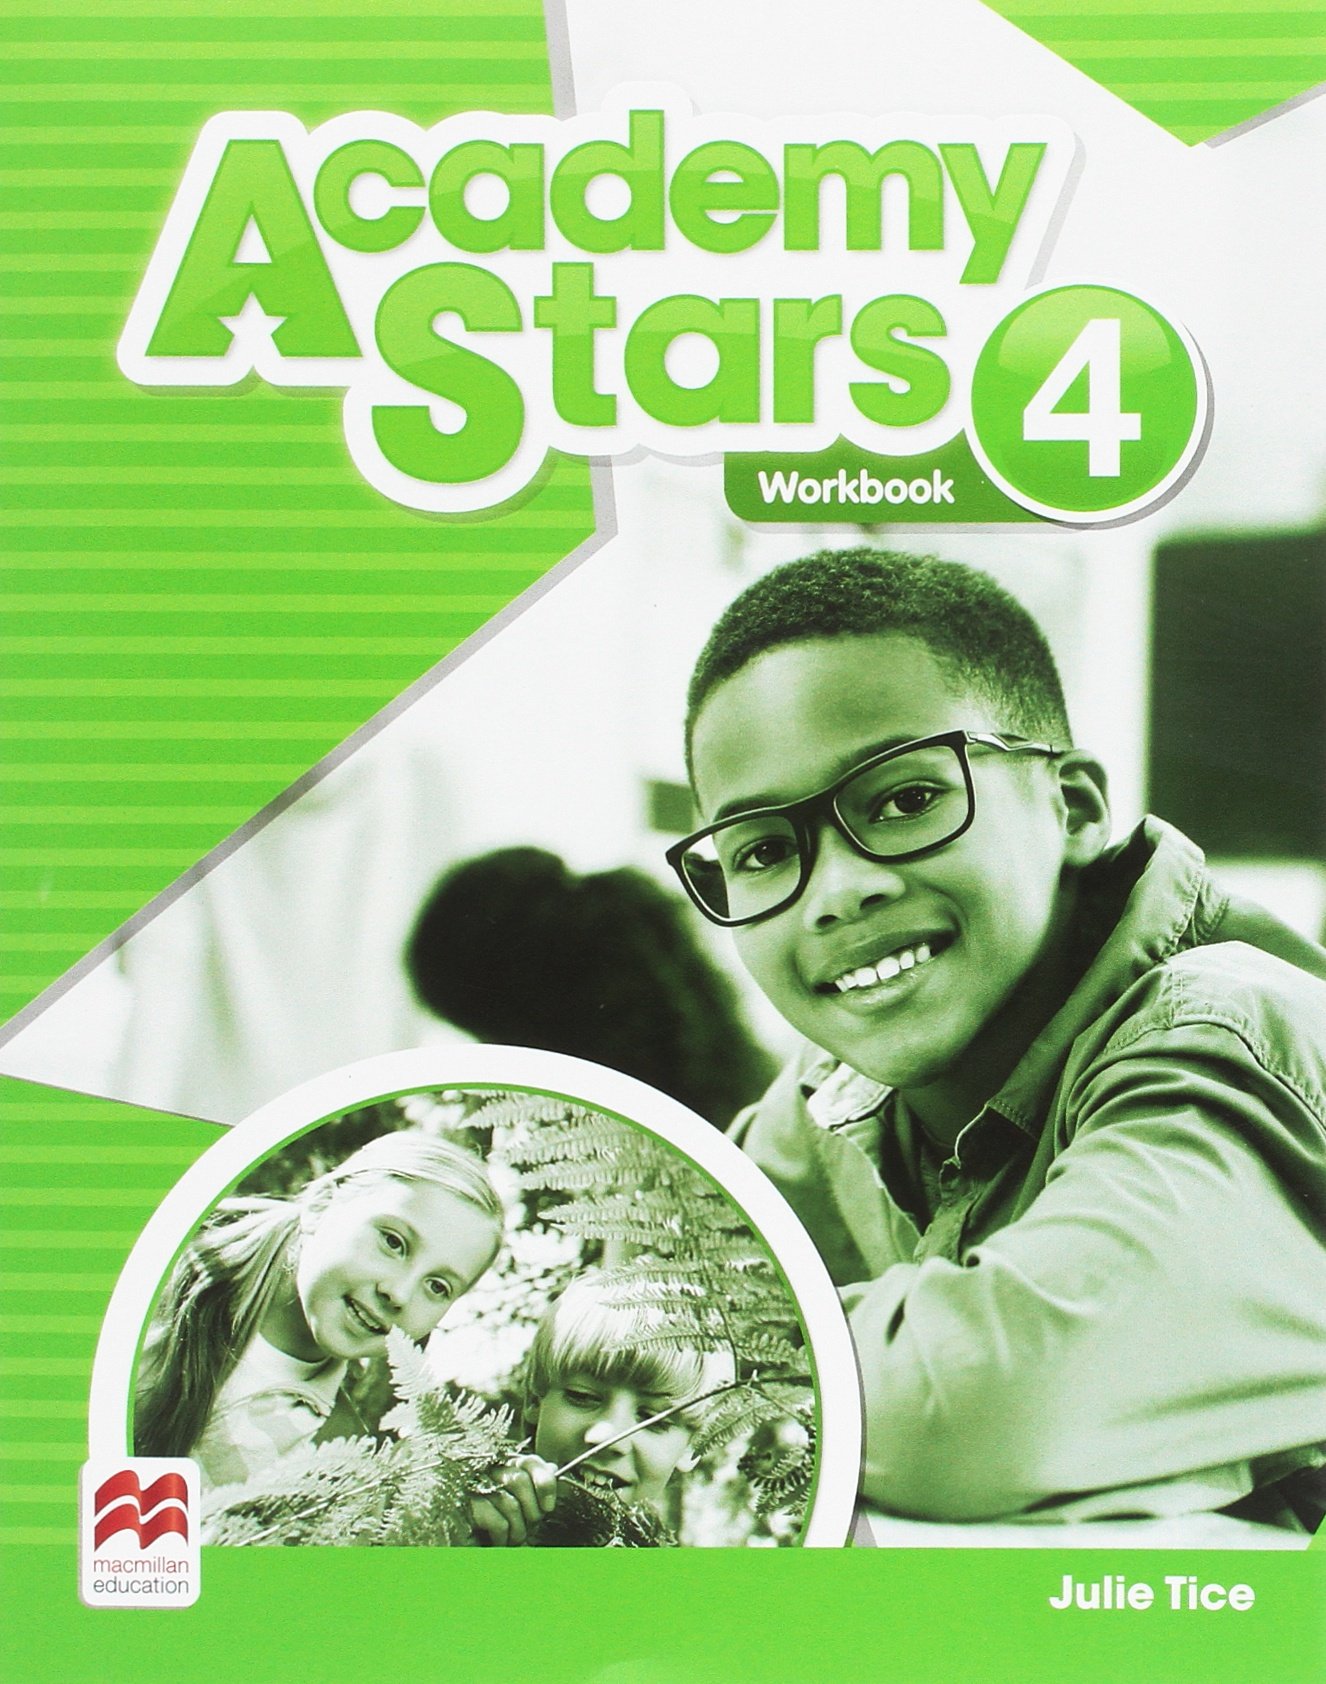 ACADEMY STARS 4 Workbook